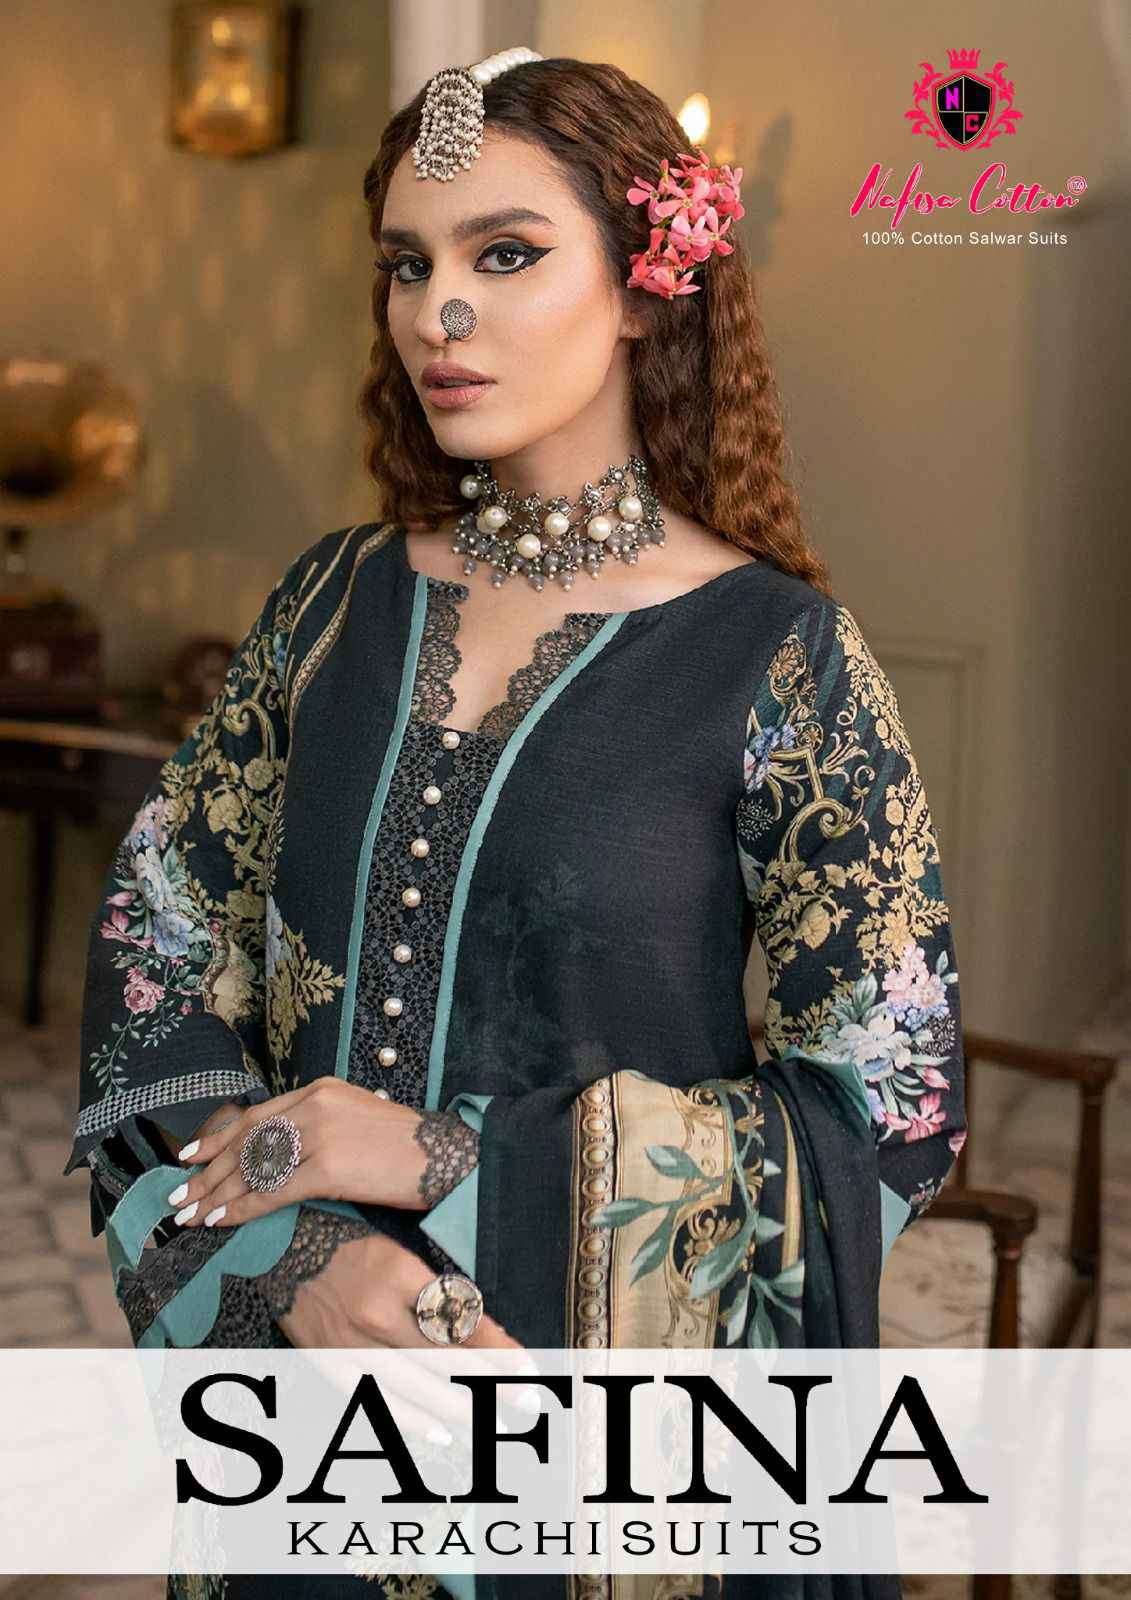 Ishaal Prints Gulmohar Vol 20 Wholesaler Of Karachi Suits